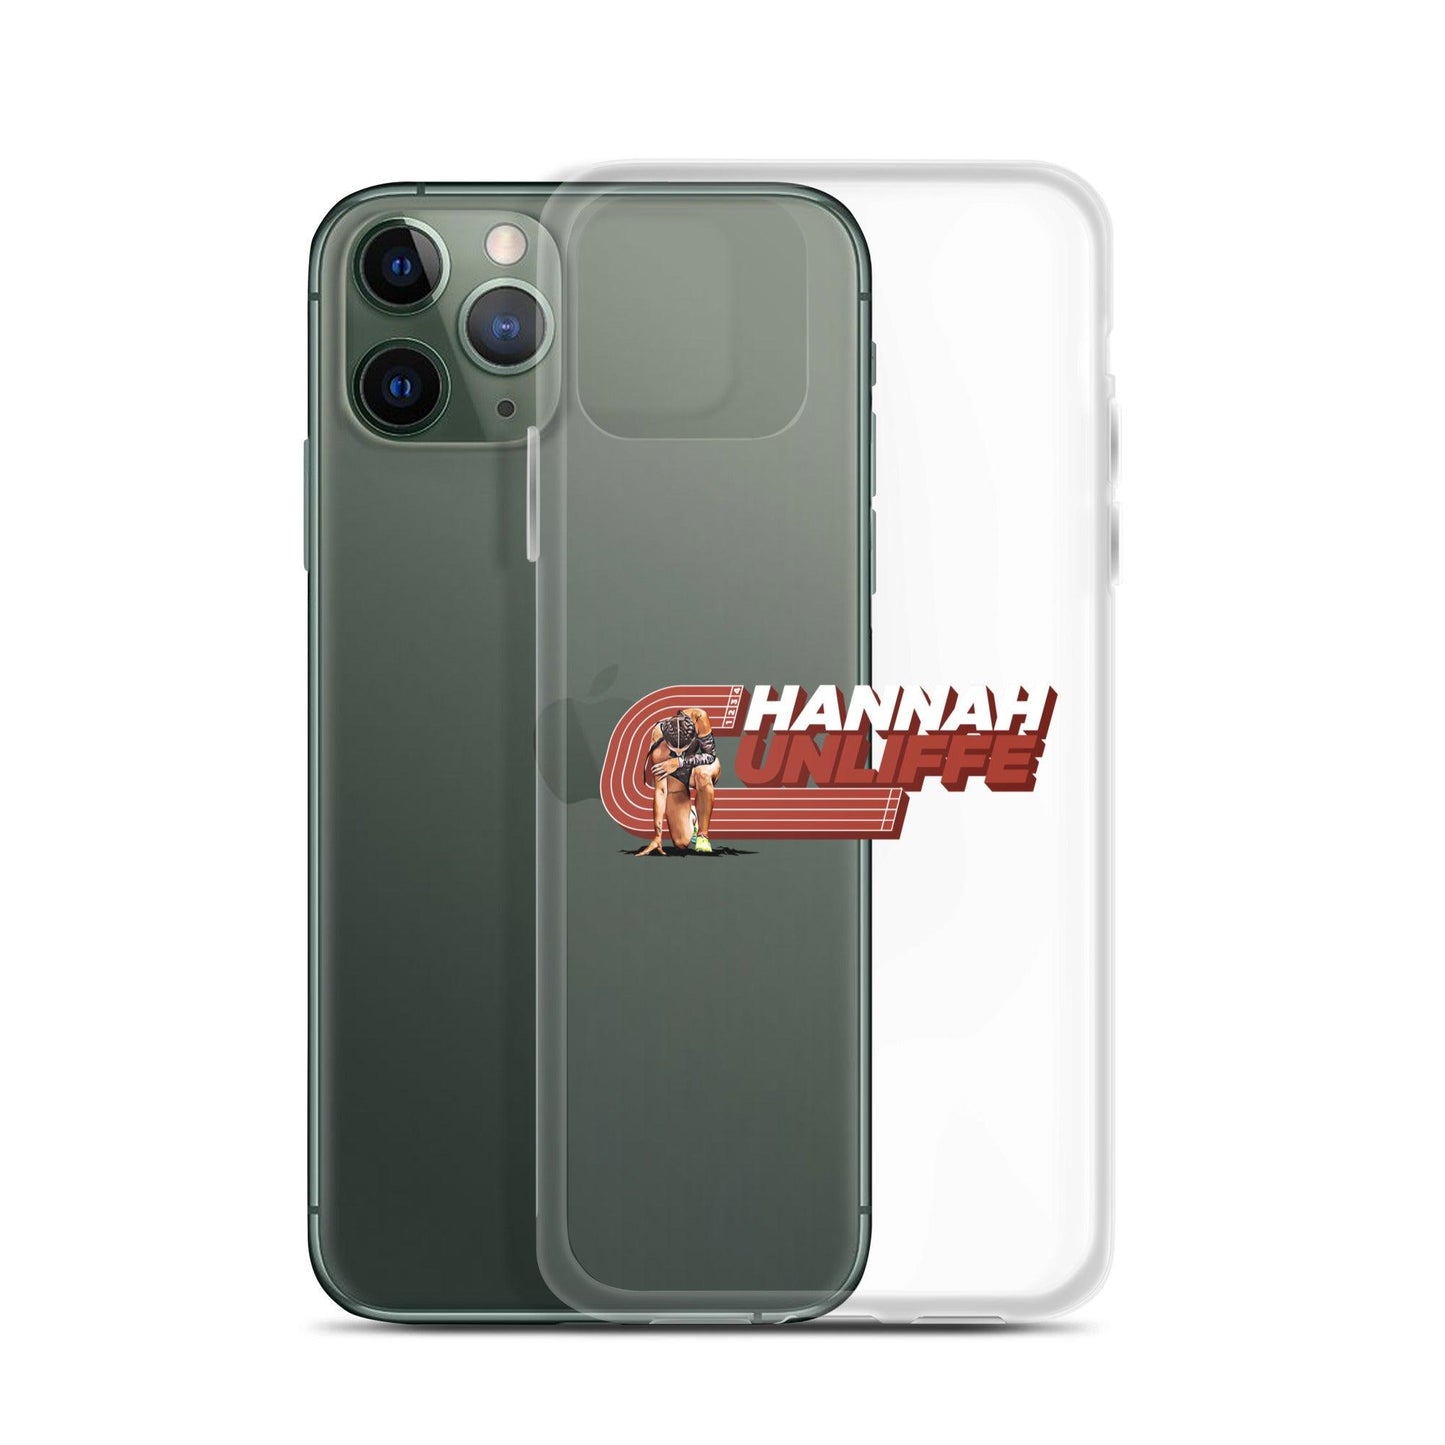 Hannah Cunliffe "Essential" iPhone Case - Fan Arch